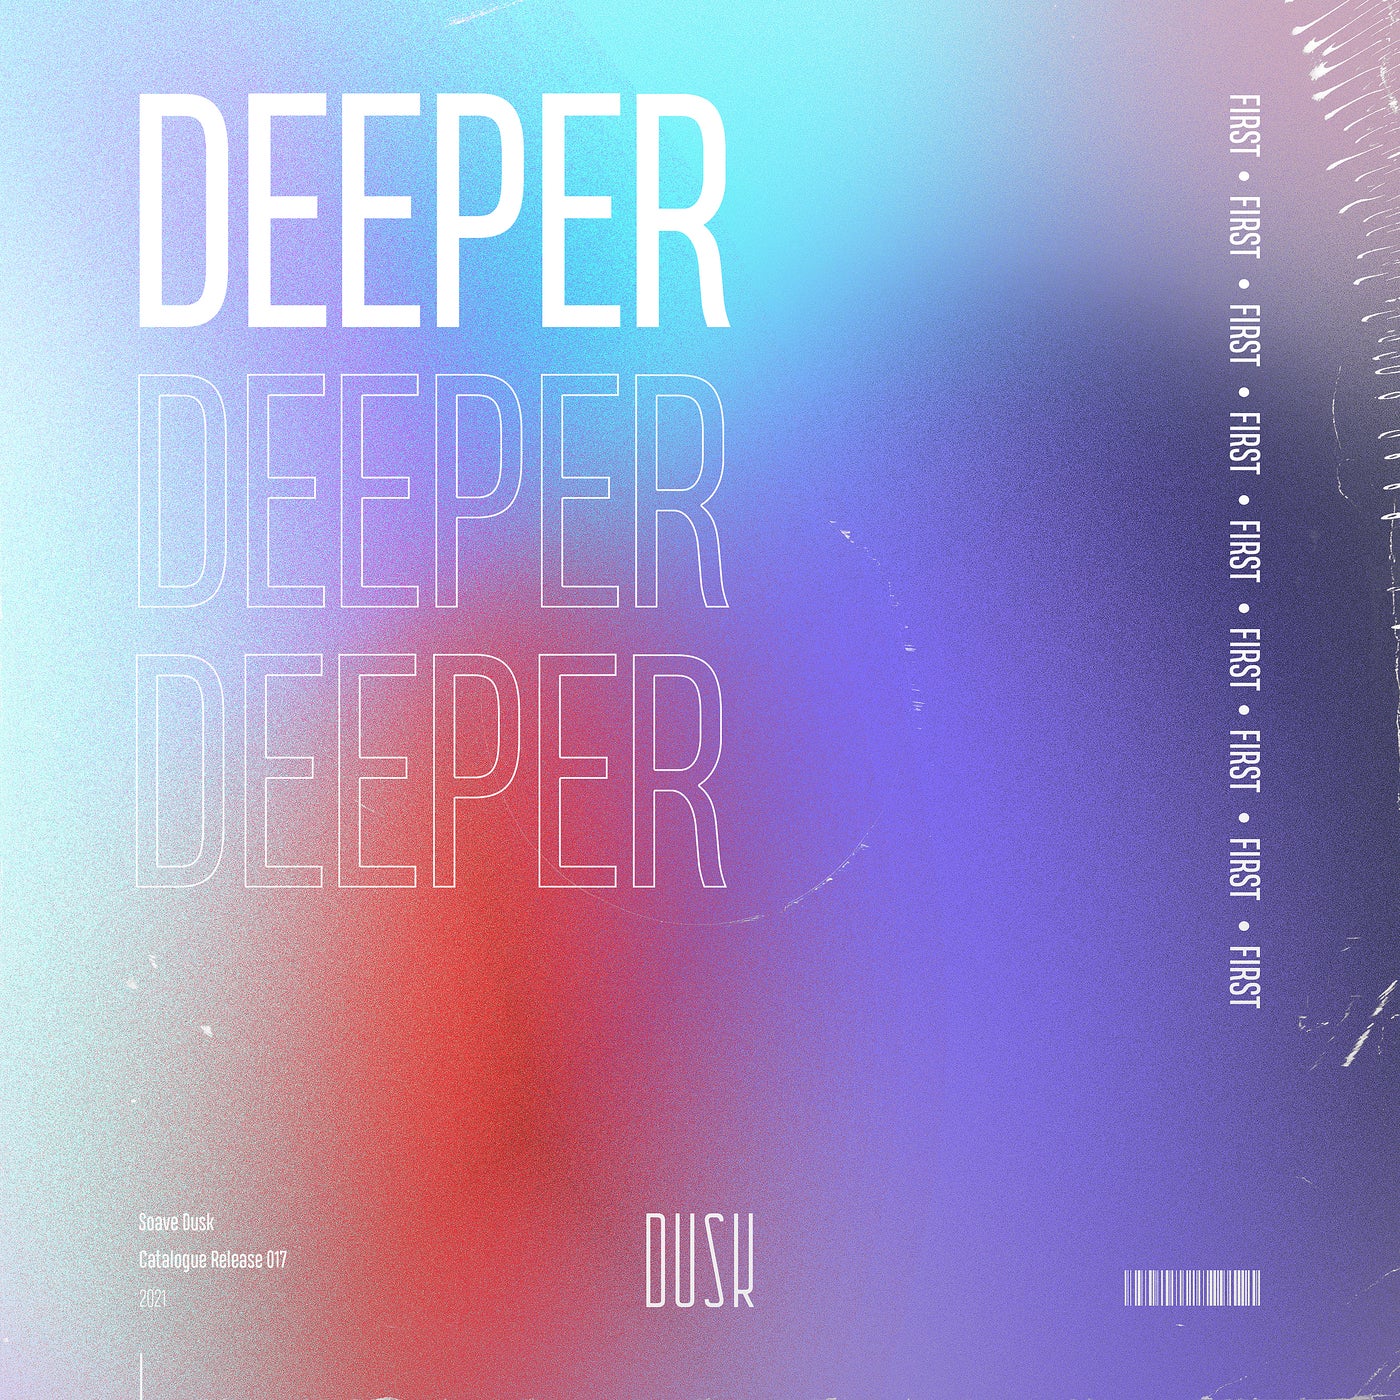 Apoena must go Deeper (Original Mix). Deep extended mix